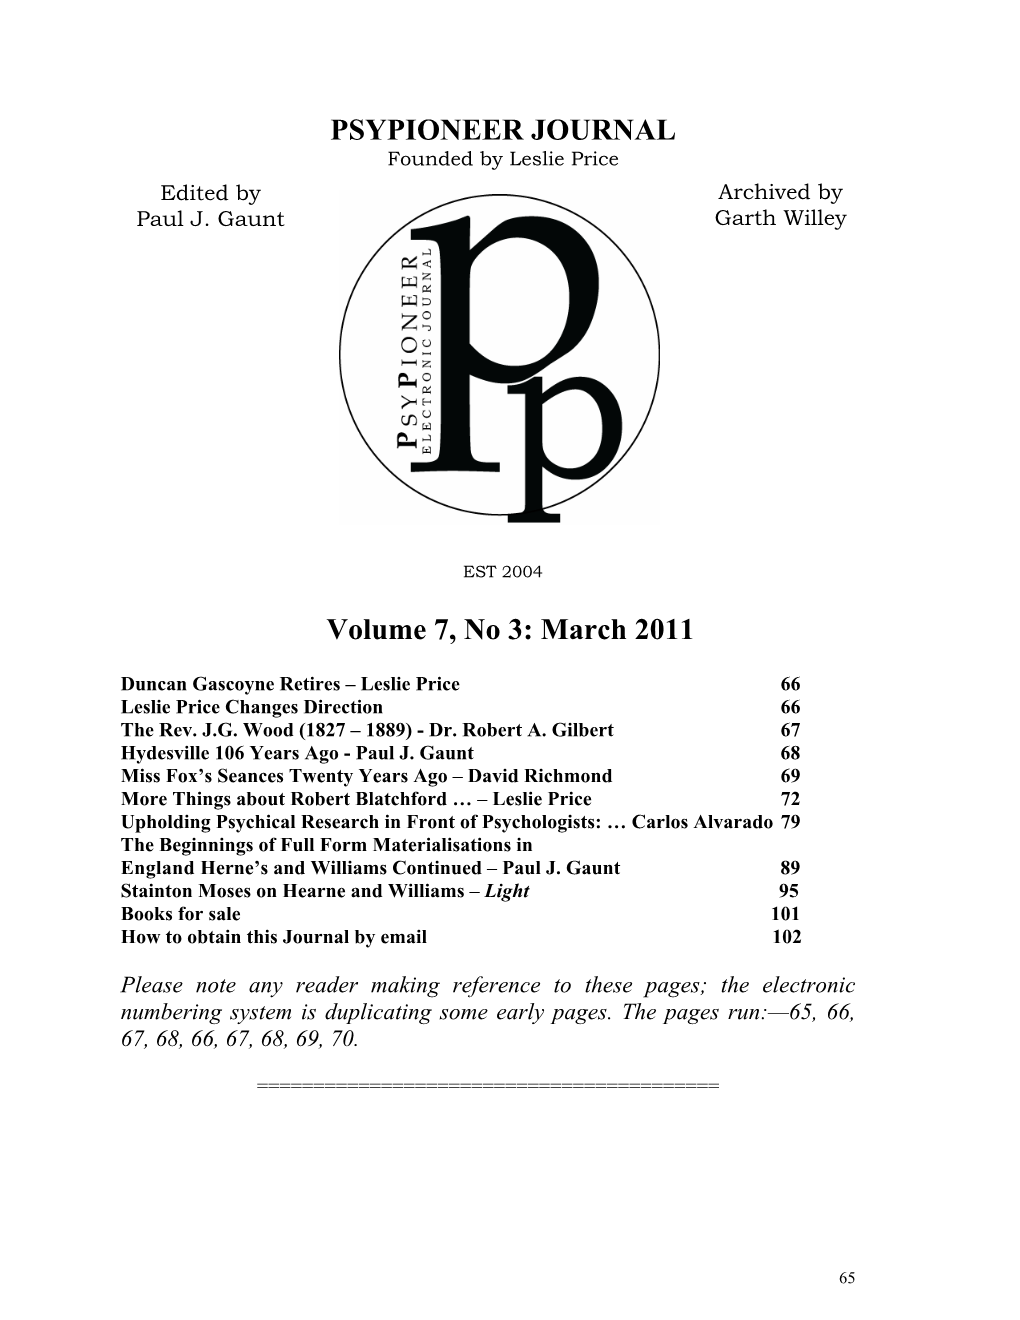 PSYPIONEER JOURNAL Volume 7, No 3: March 2011